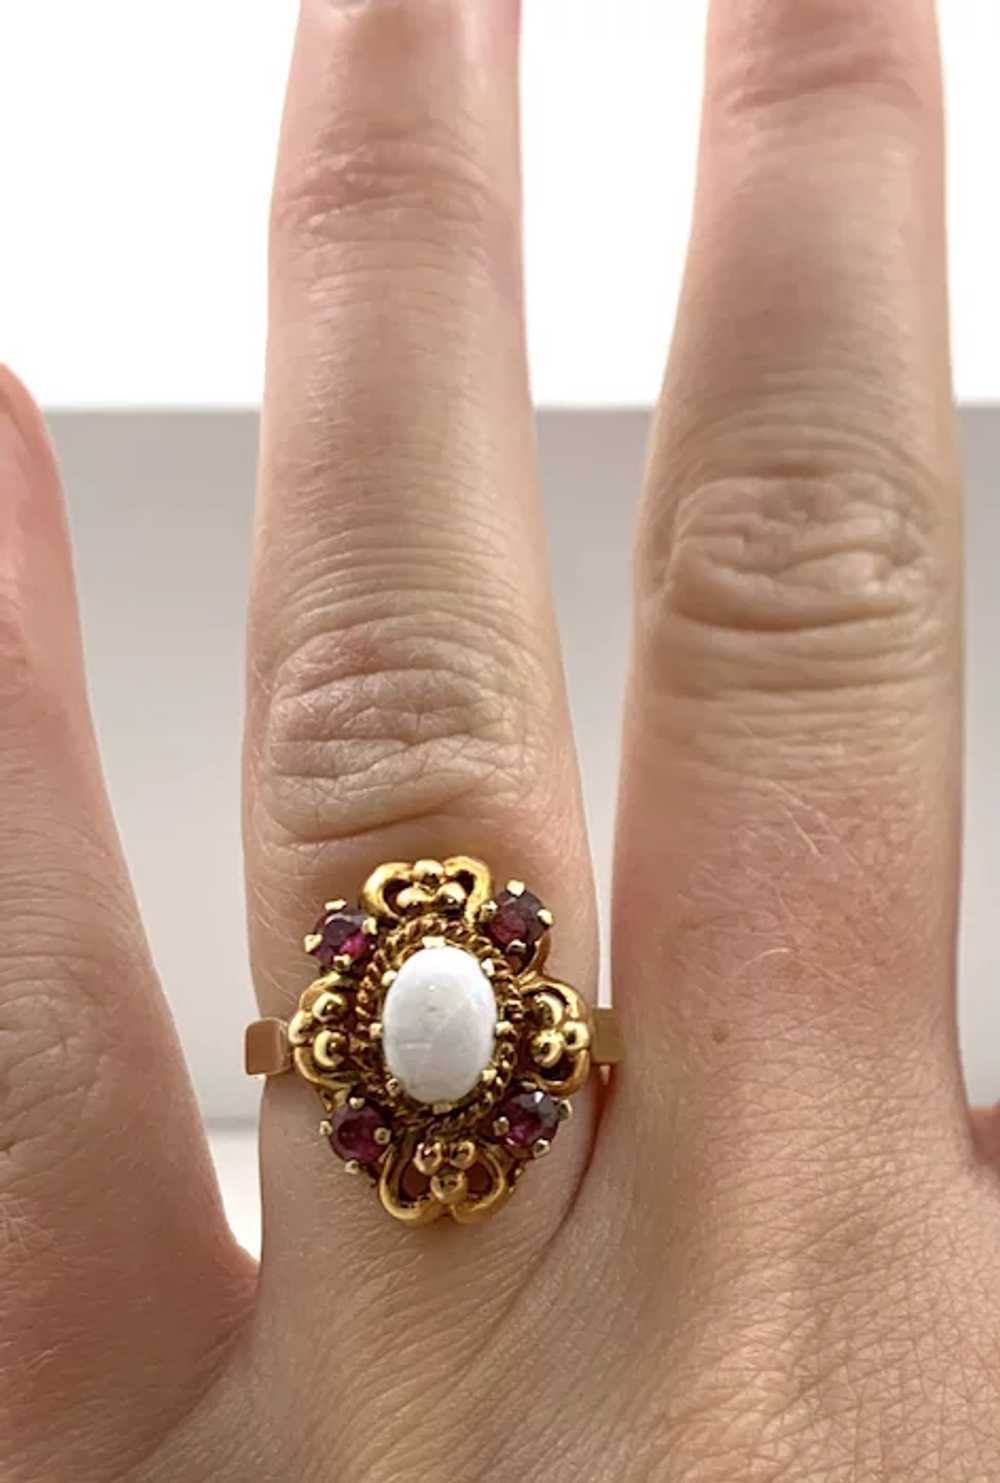 14kt Gold, Opal & Ruby Women's Ring - image 4